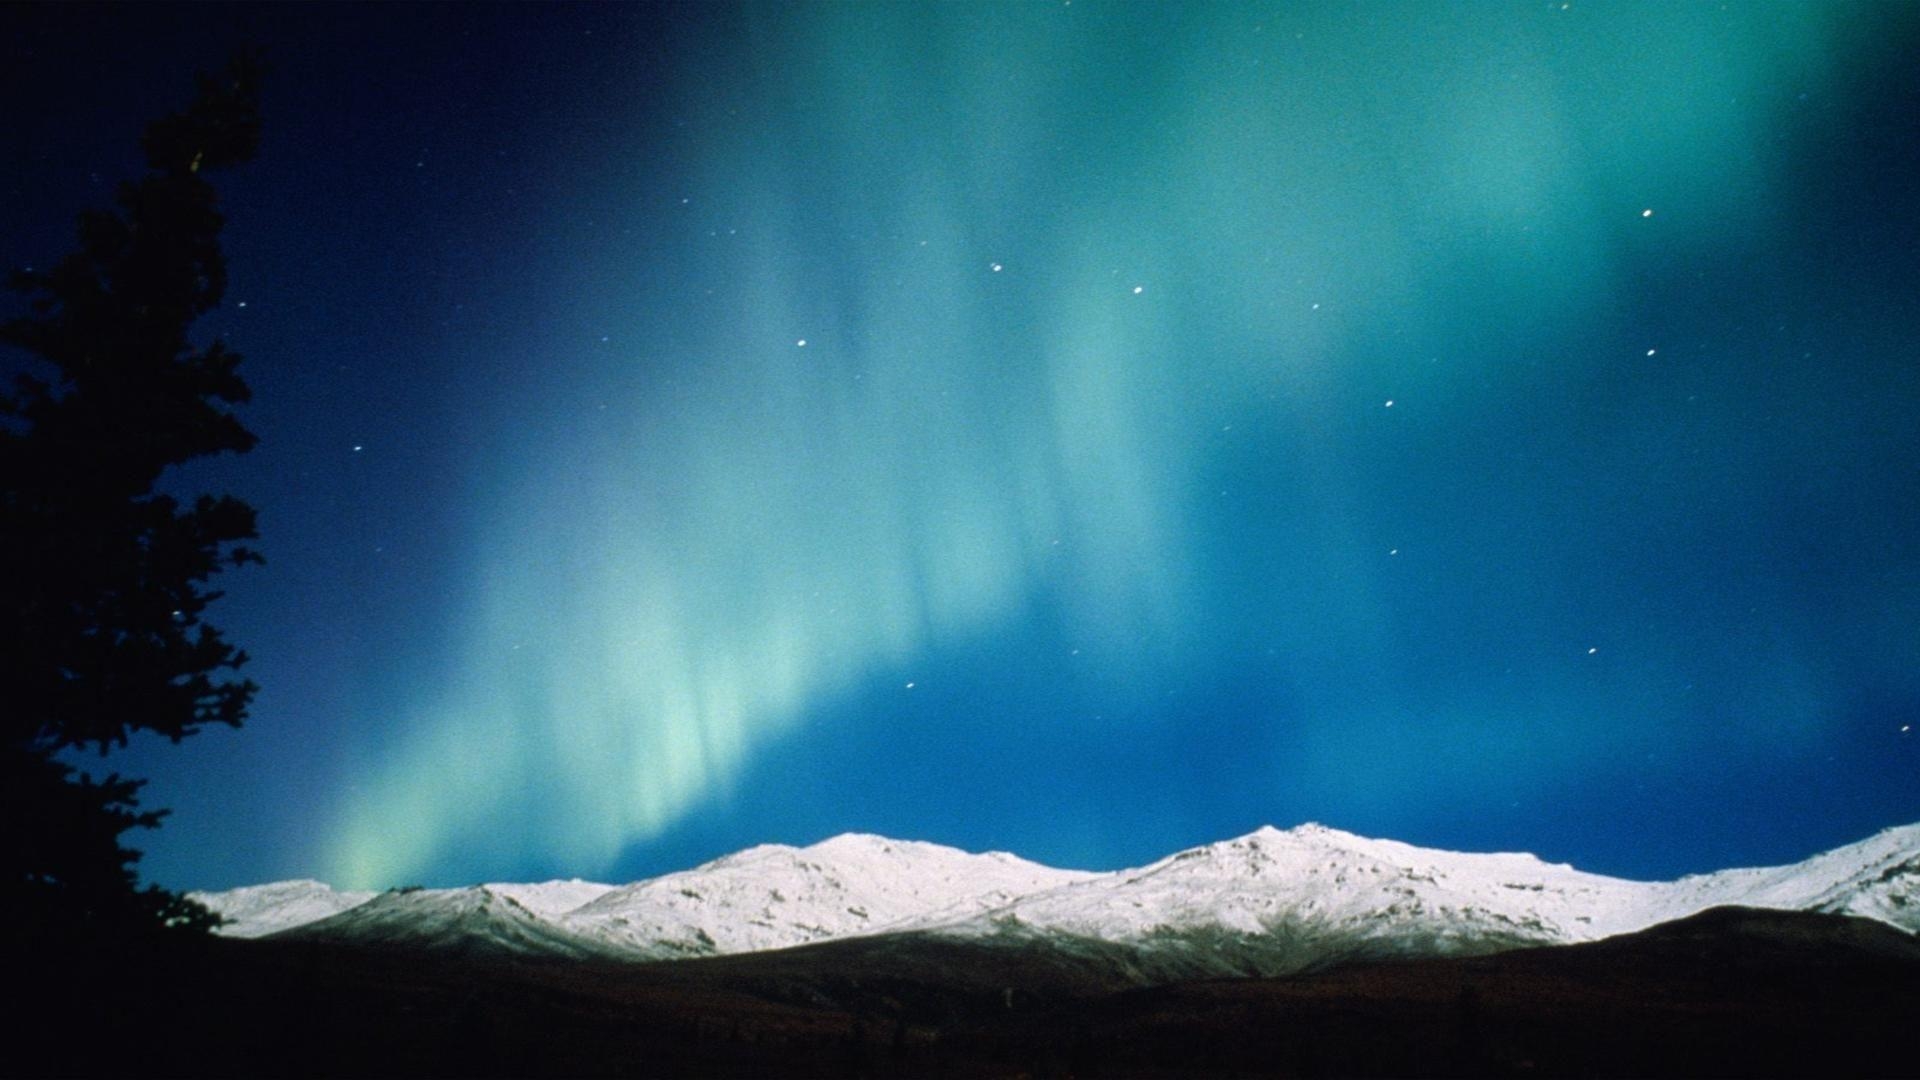 Hd Wallpapers Northern Lights Alaska Mountain 554 X 731 65 Kb Jpeg